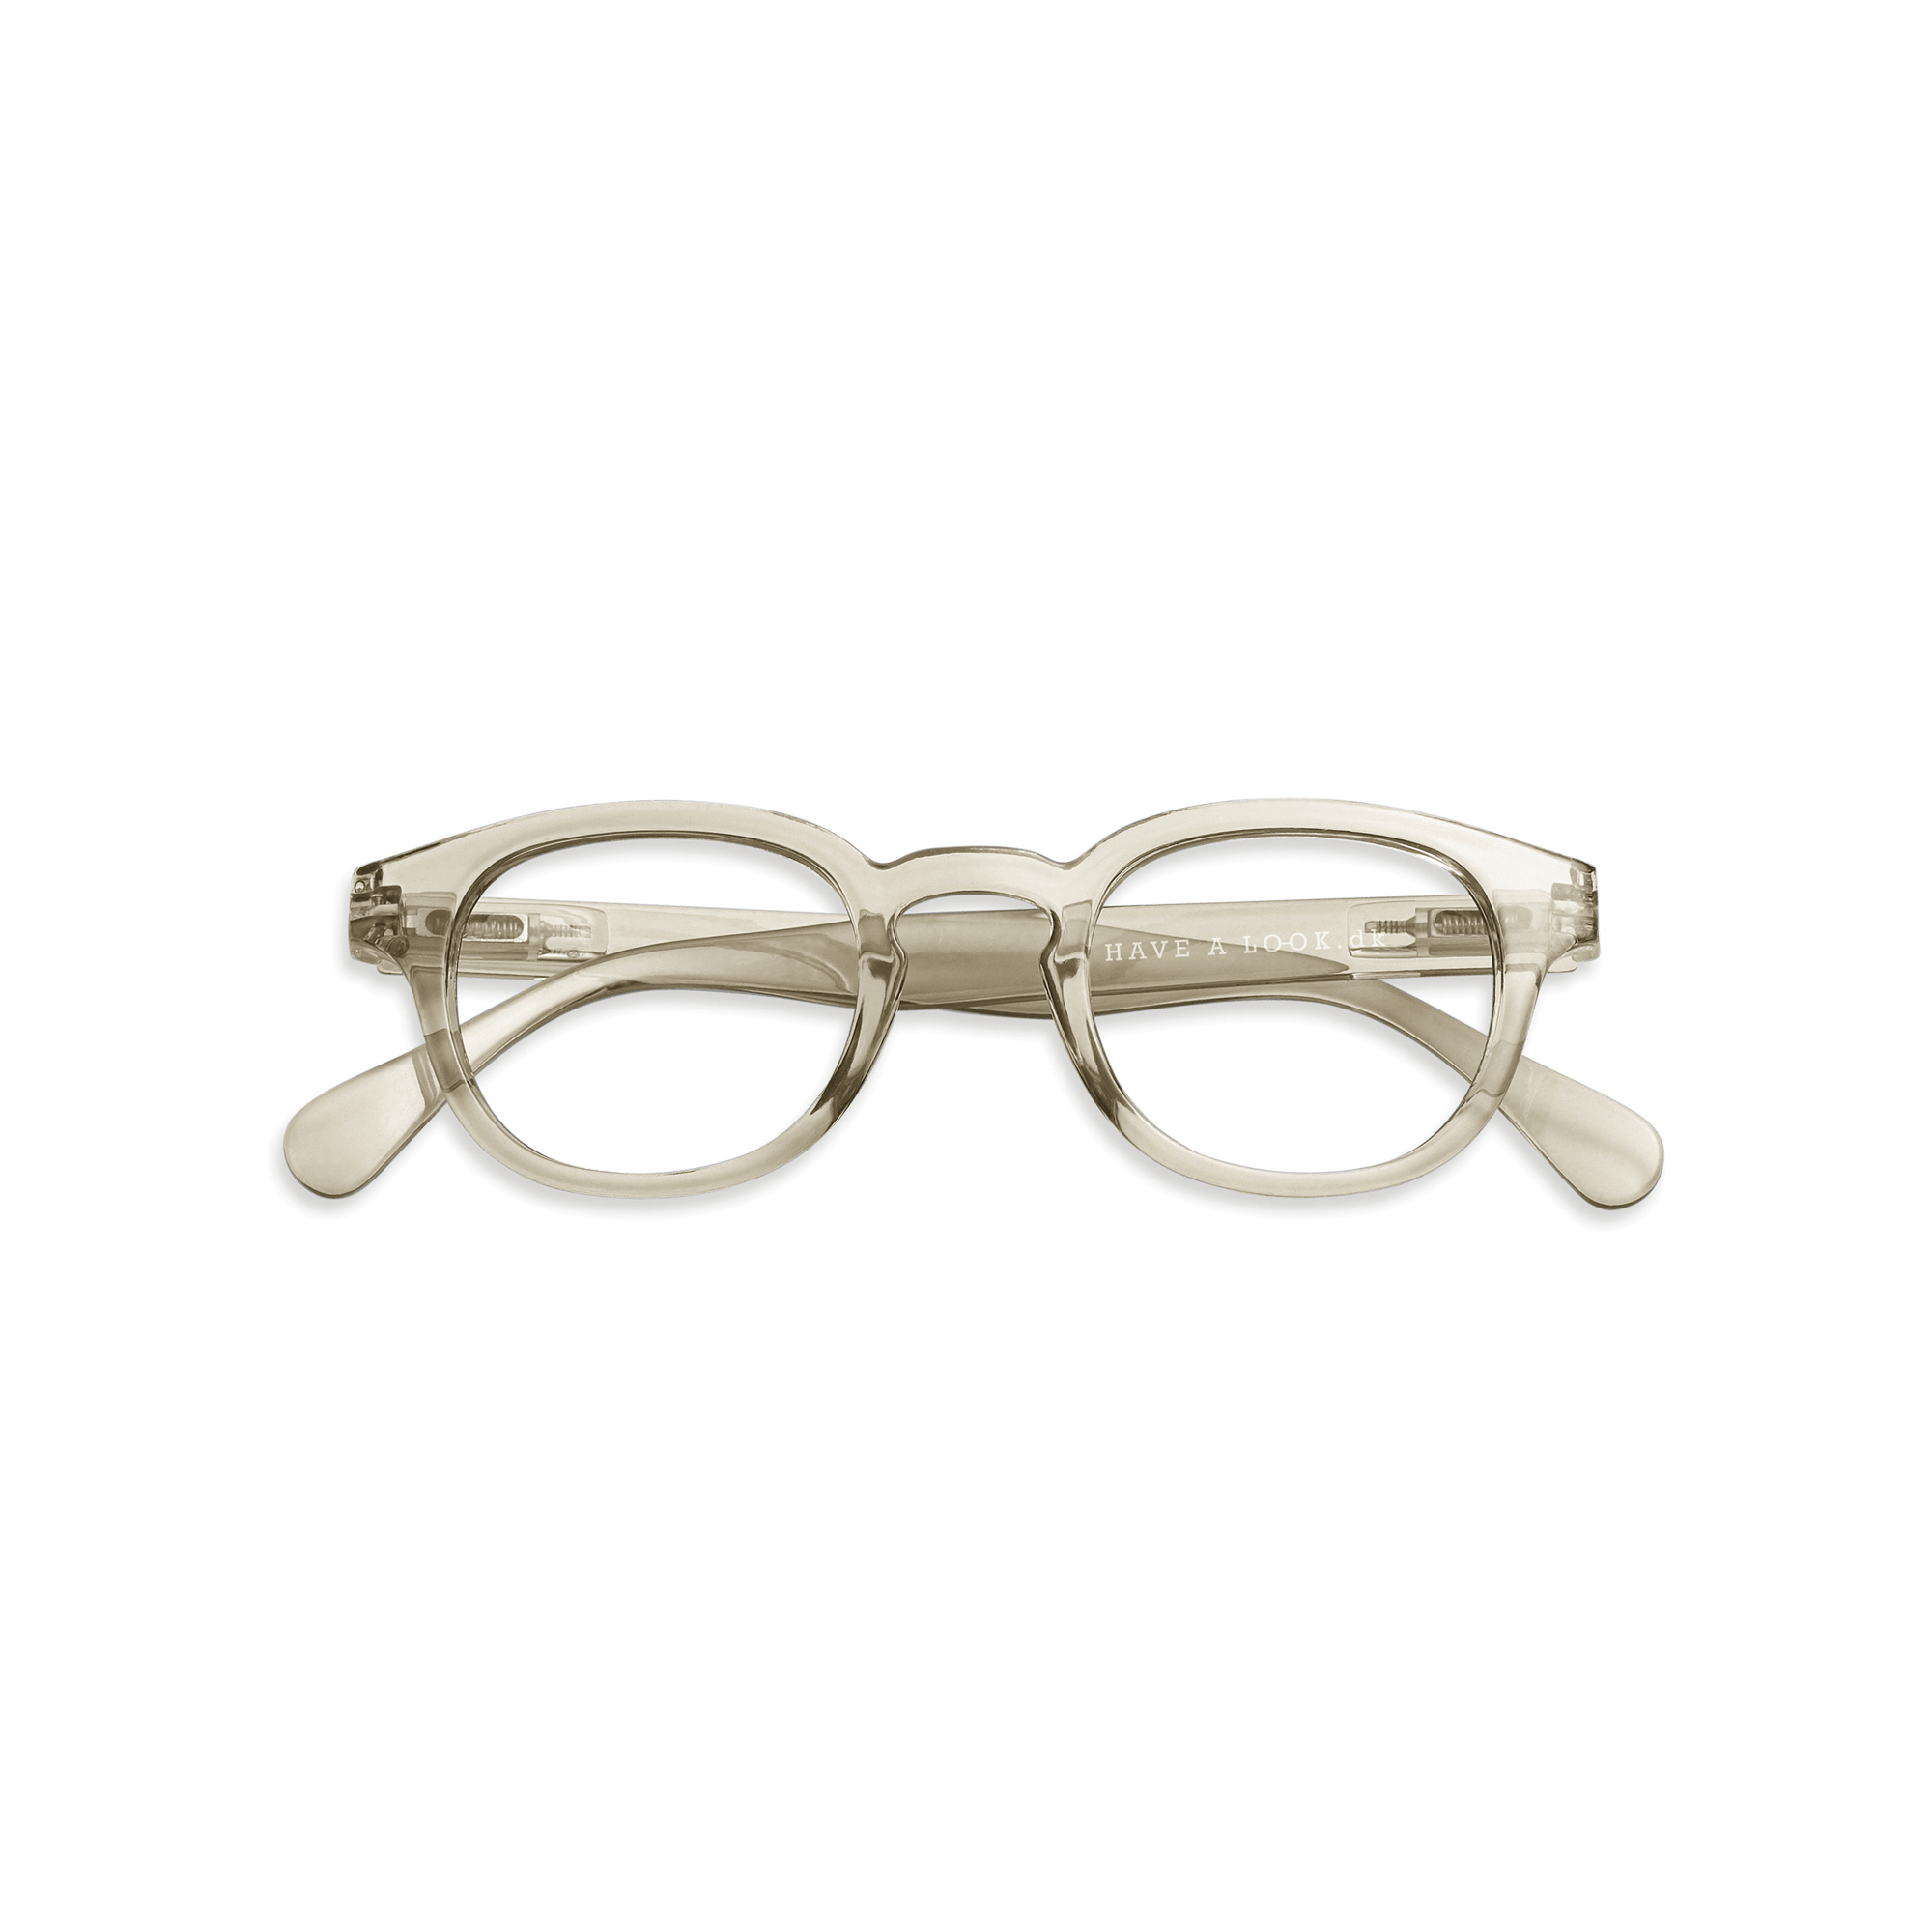 Minus glasses Type C - olive